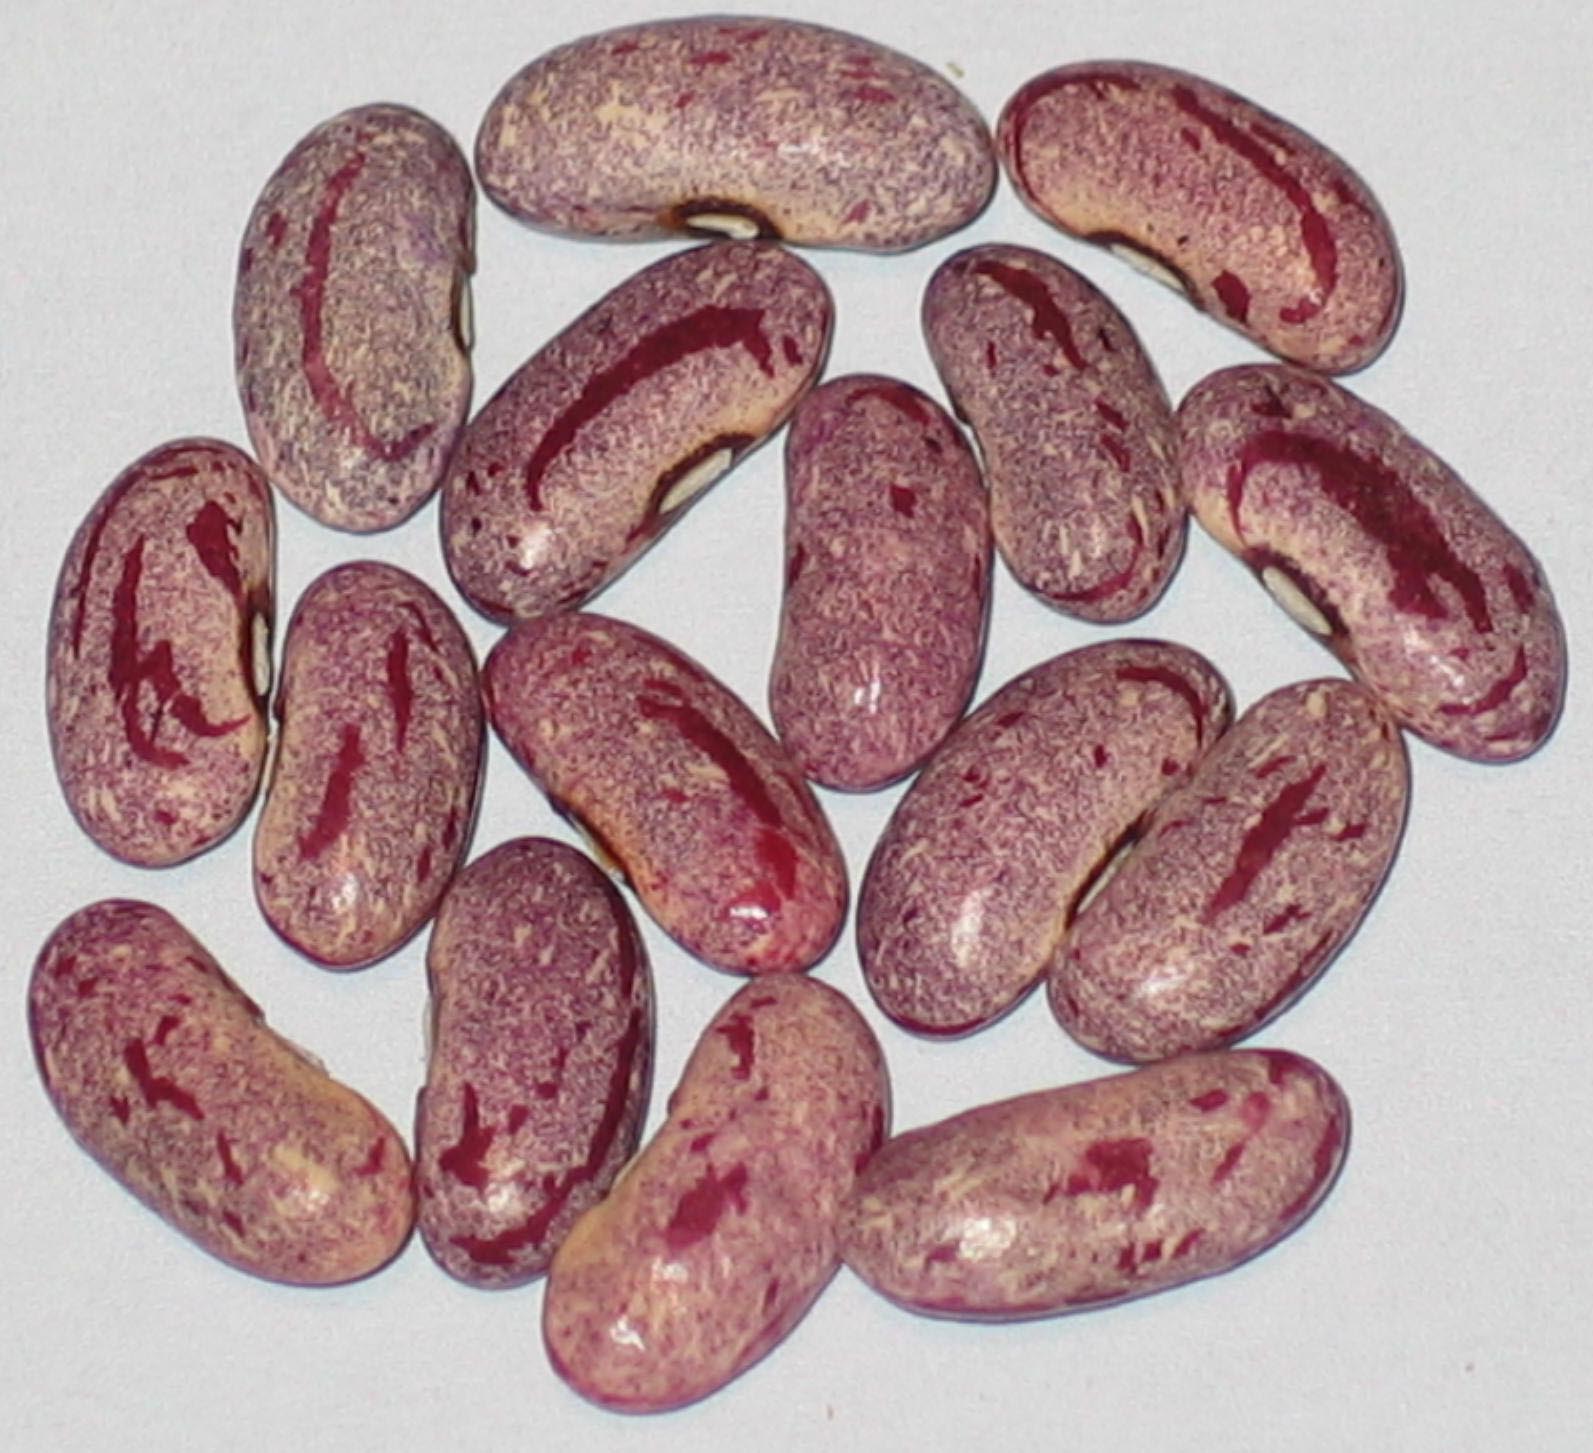 image of Pecatonica beans